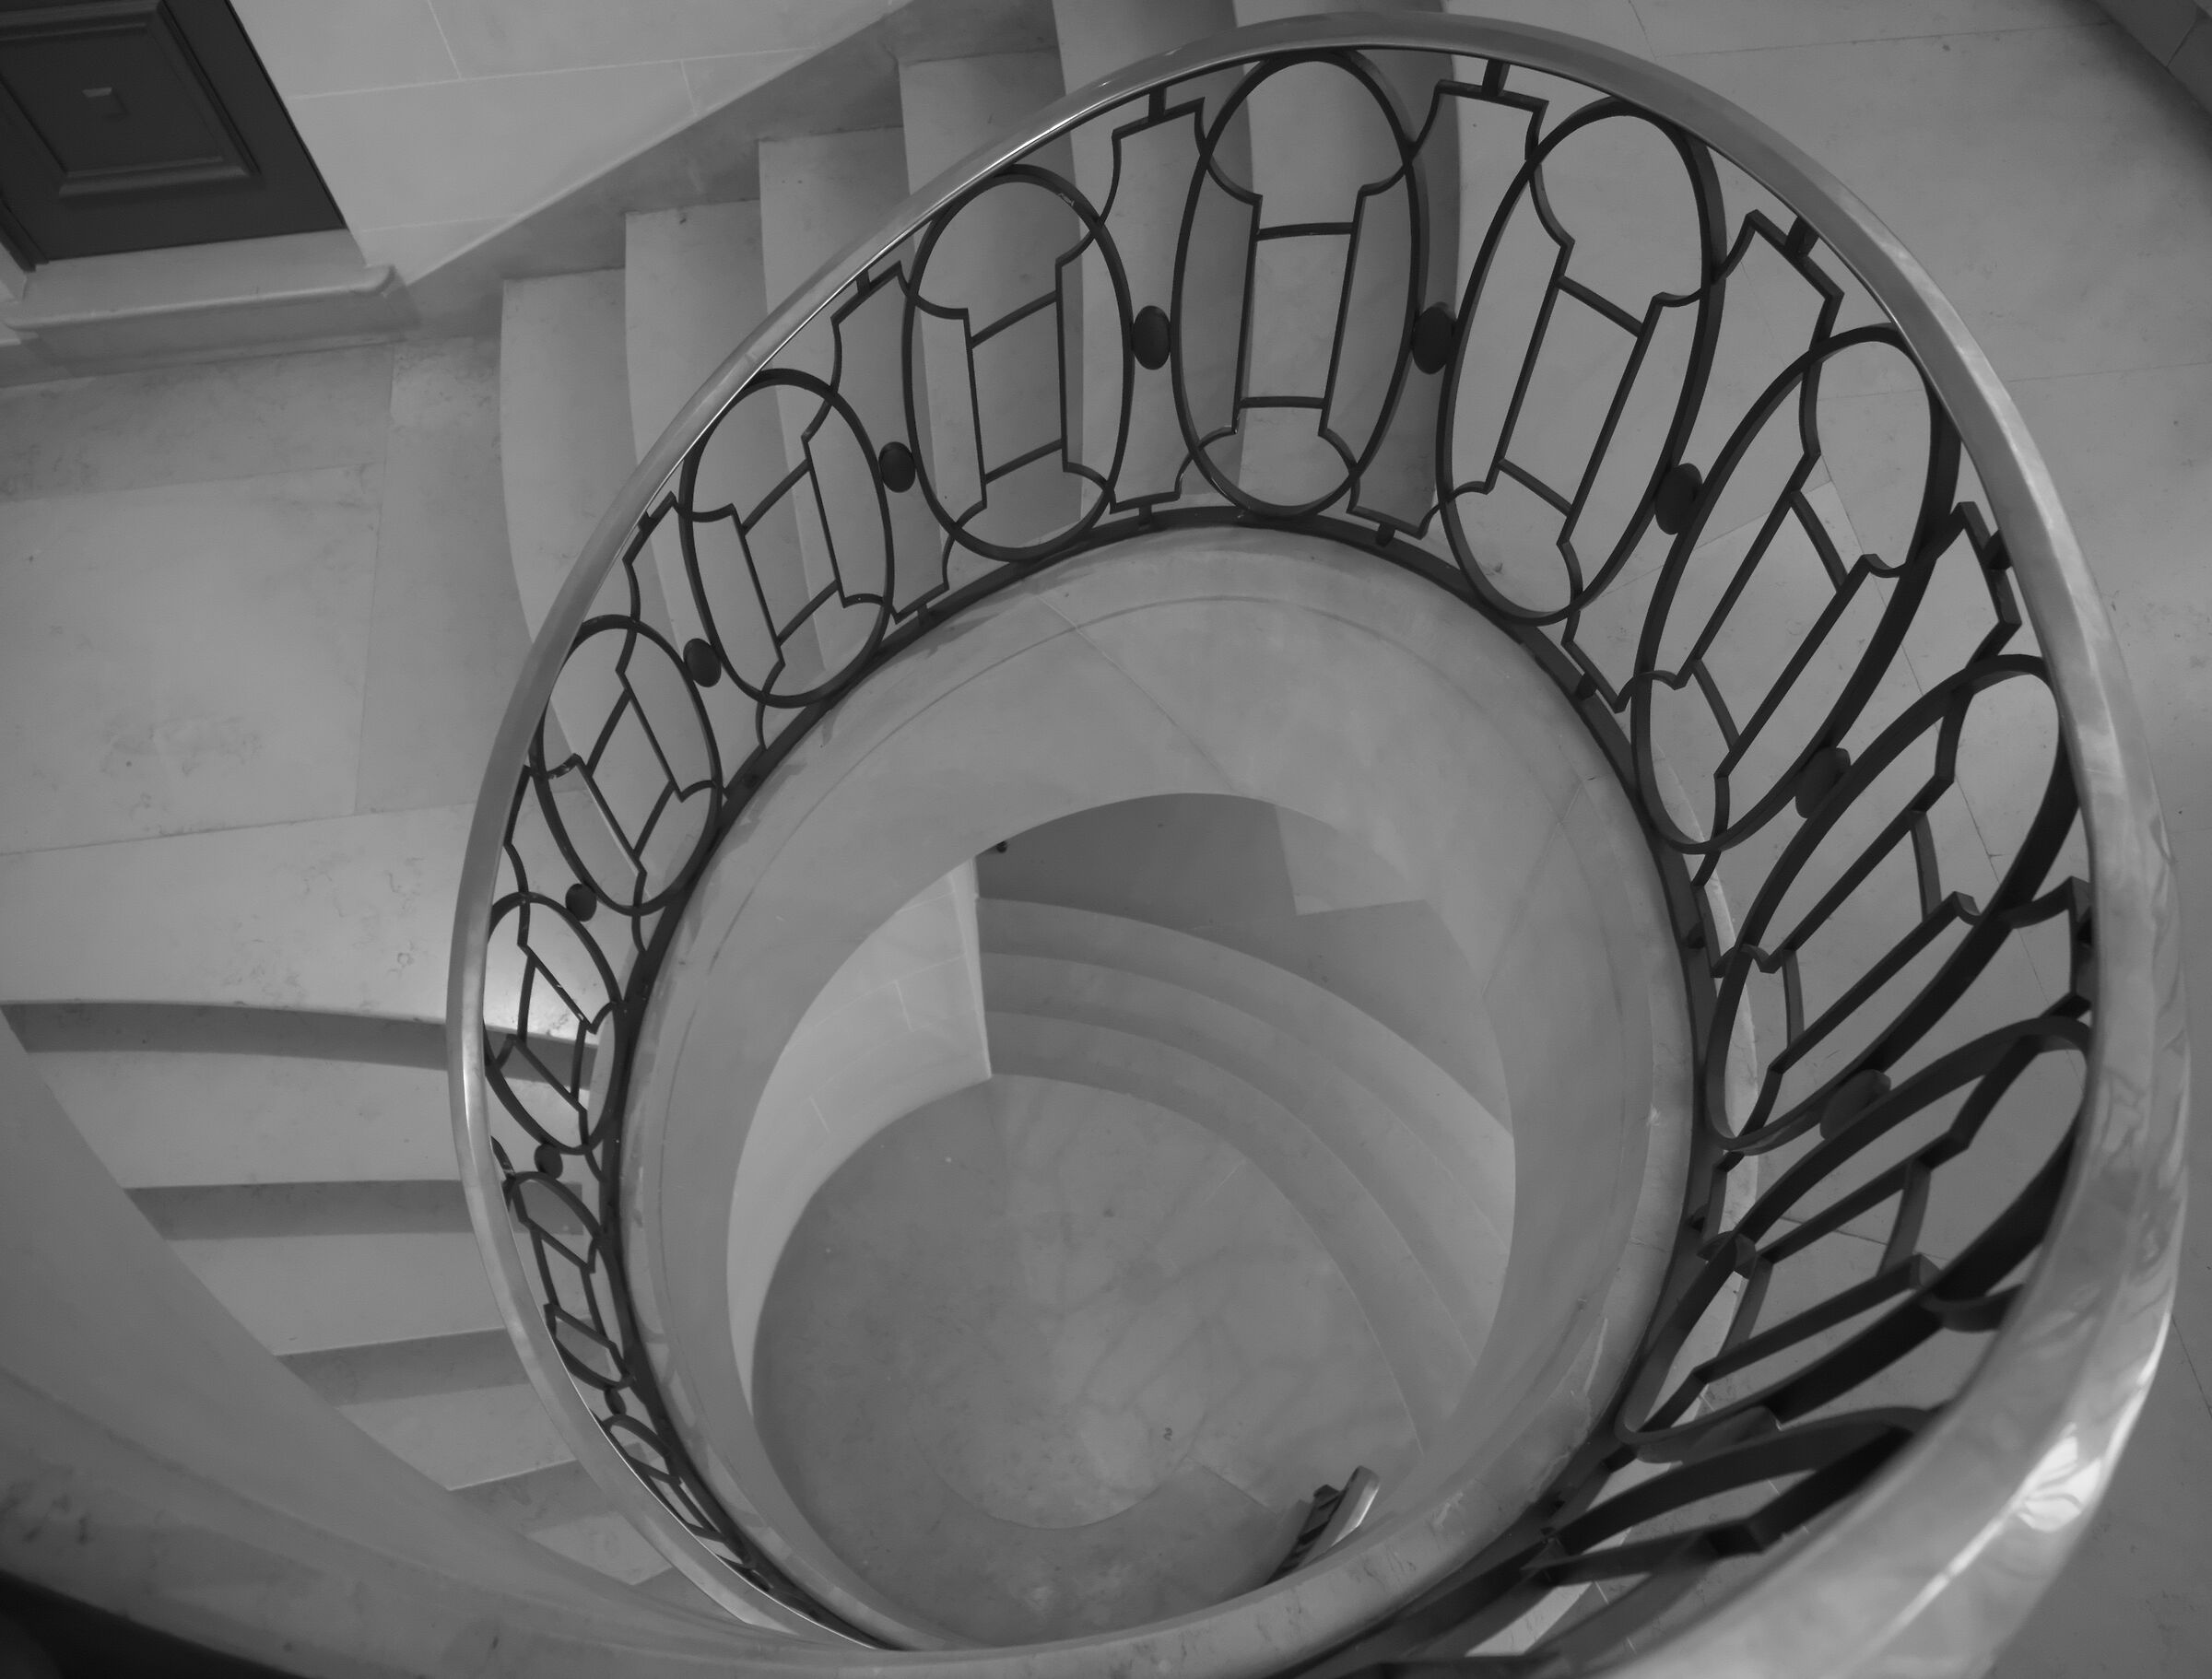 Bibliothèque National - Spiral staircase b/w...